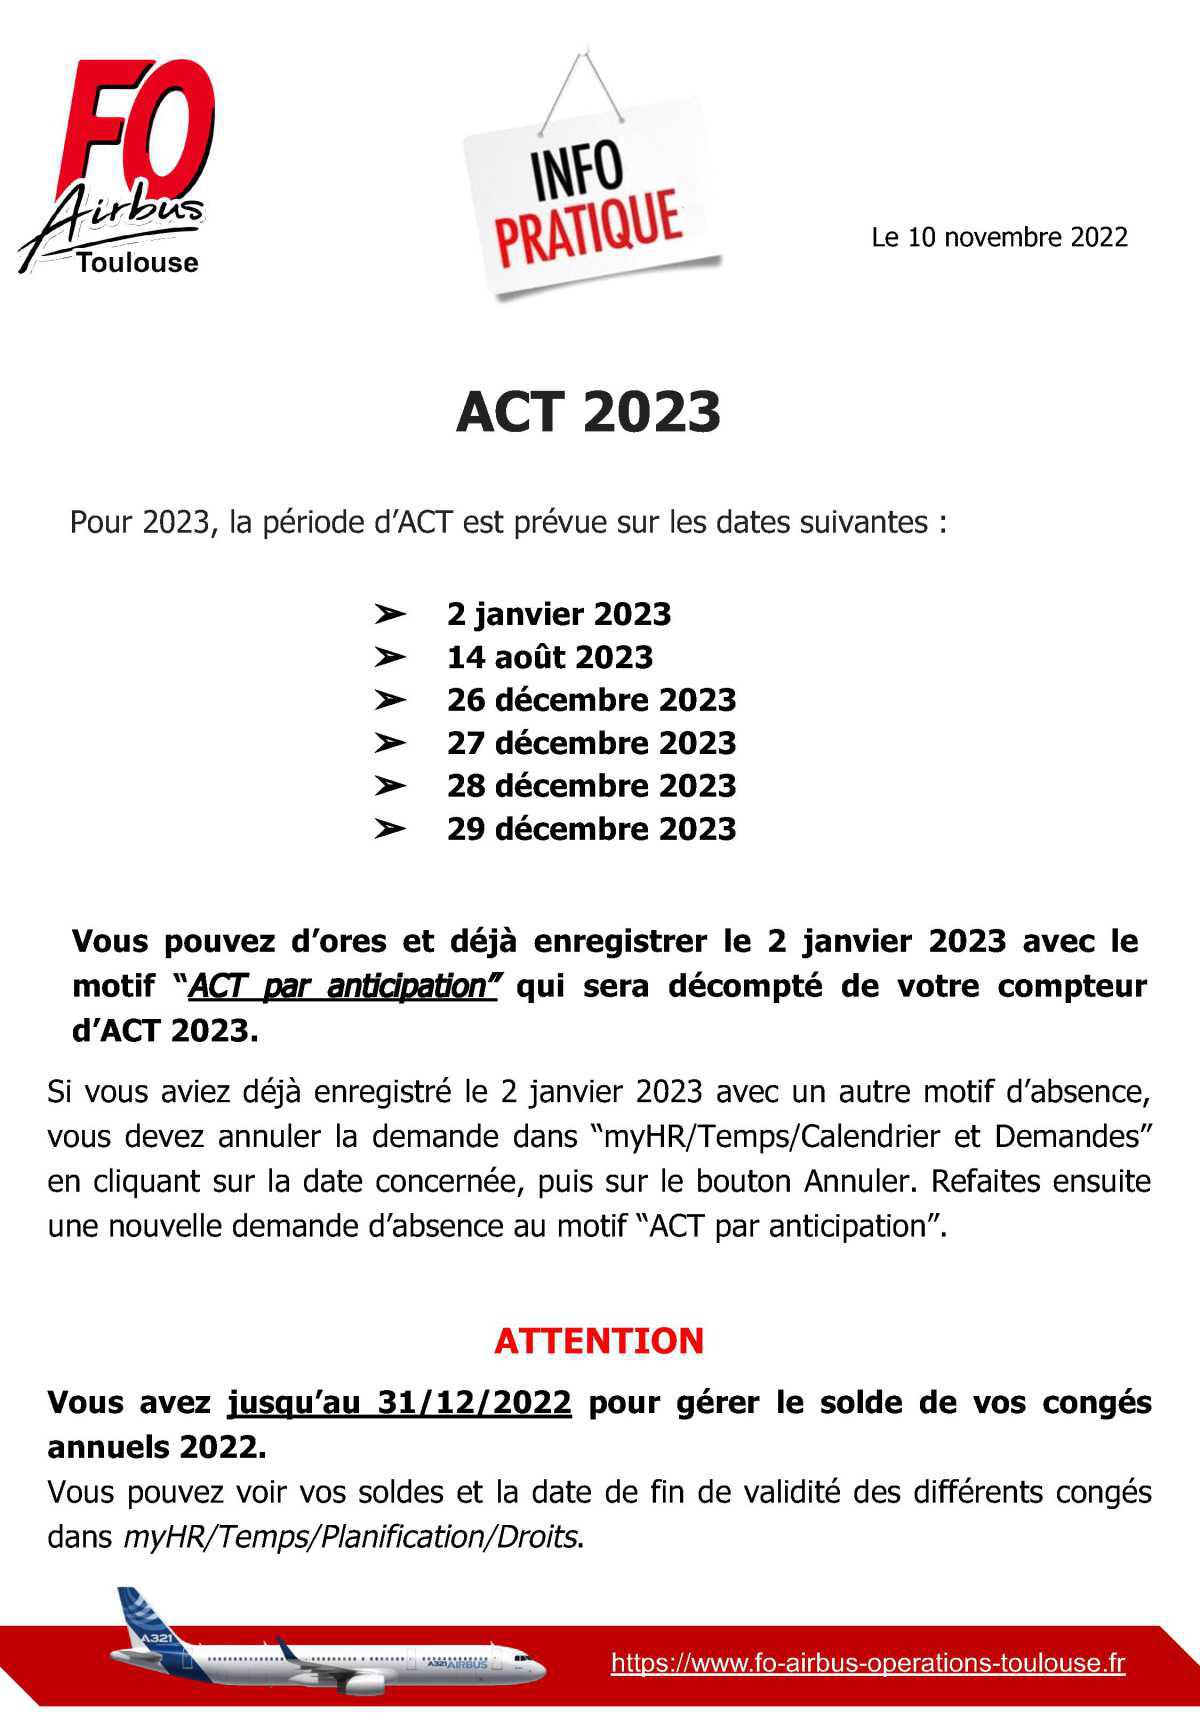 InFO pratique: ACT 2023